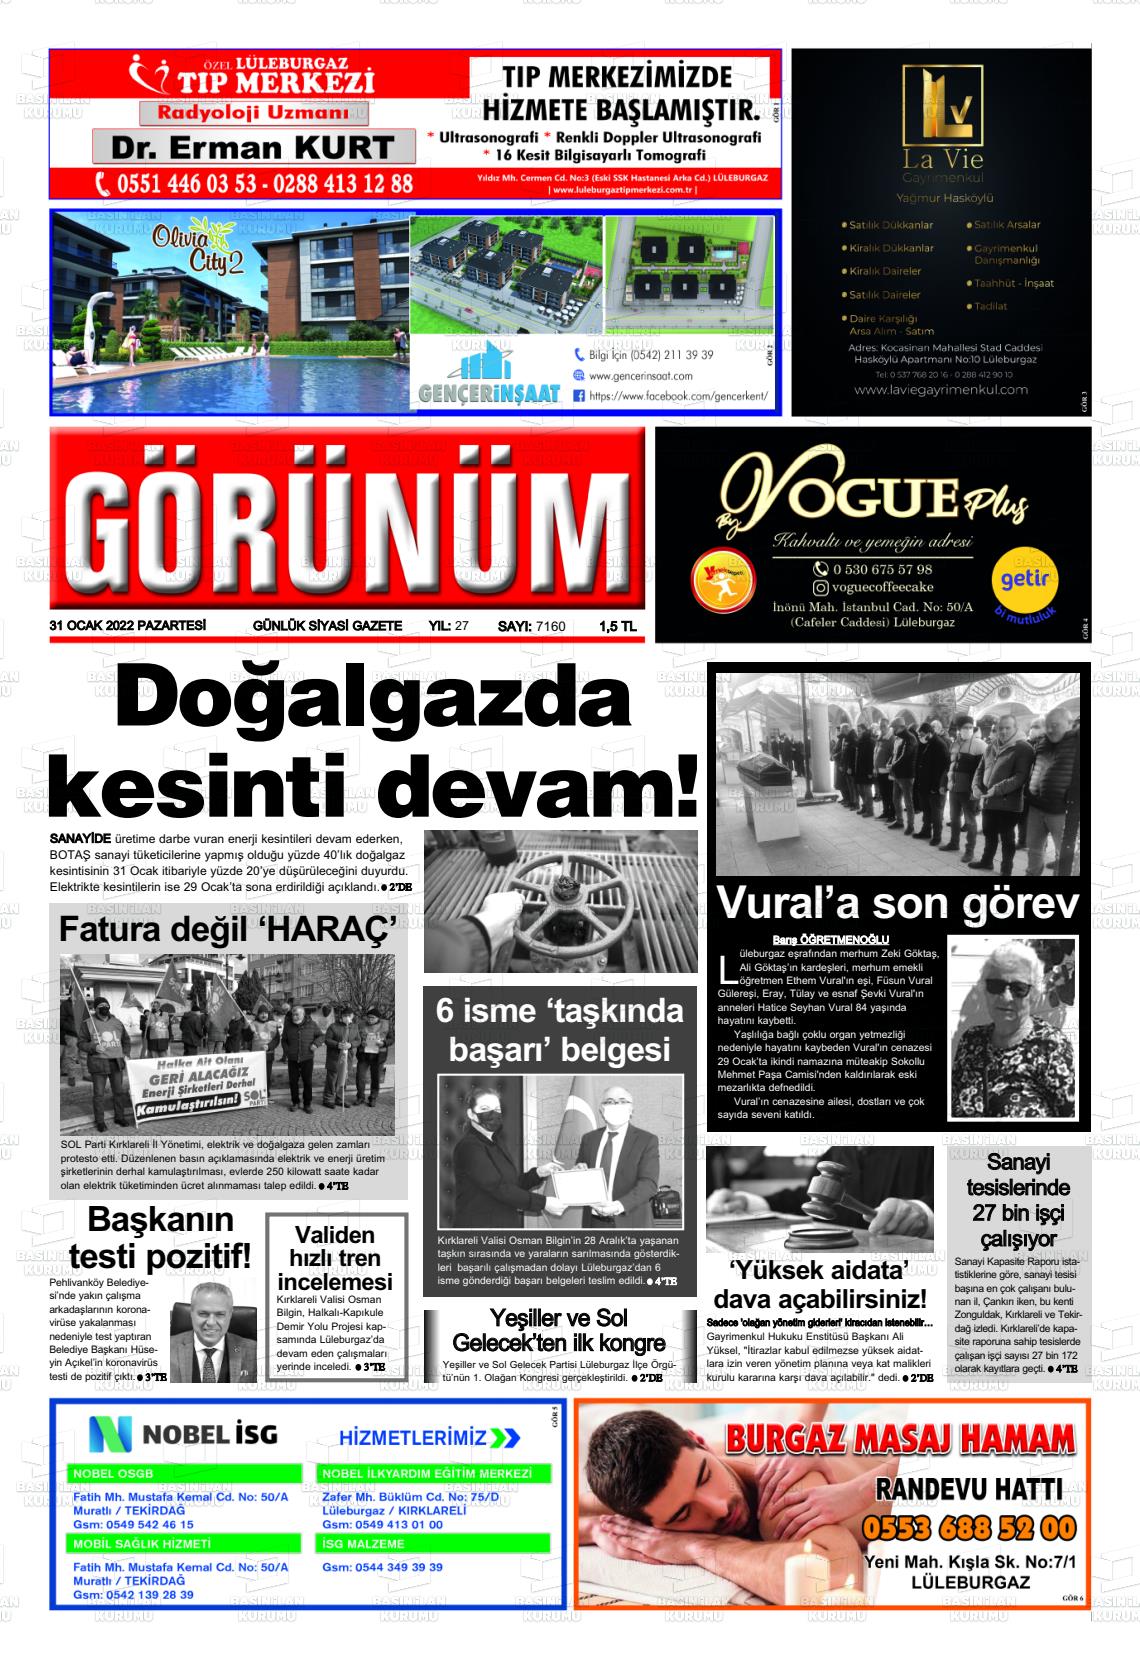 31 Ocak 2022 Lüleburgaz Görünüm Gazete Manşeti